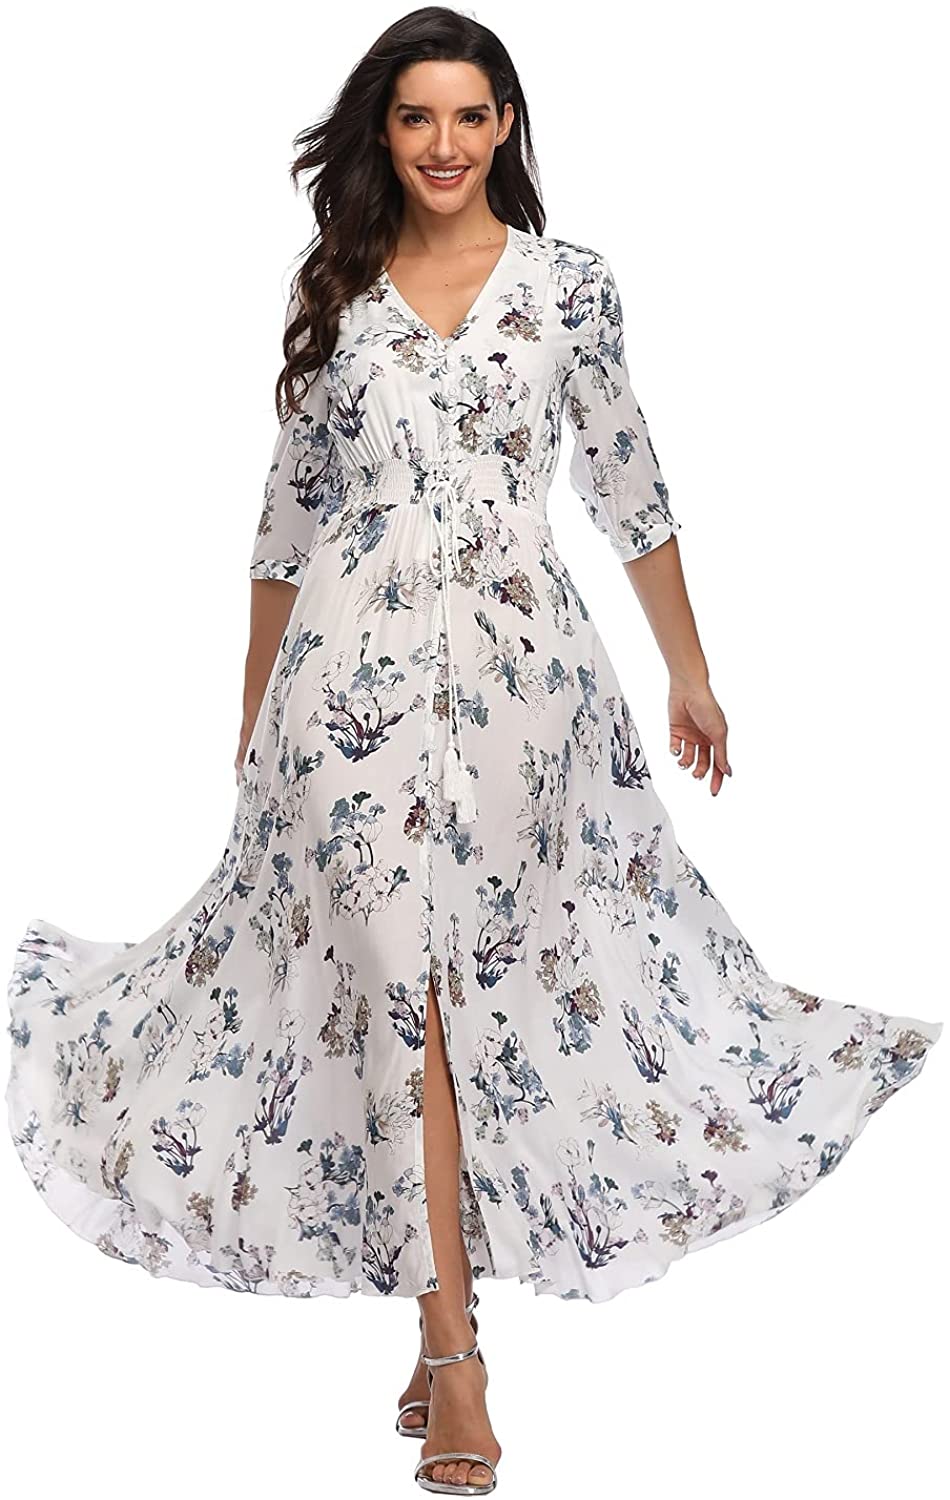 Hessimy Womens Floral Maxi Dresses Boho Button Up Split Beach Party Dress 